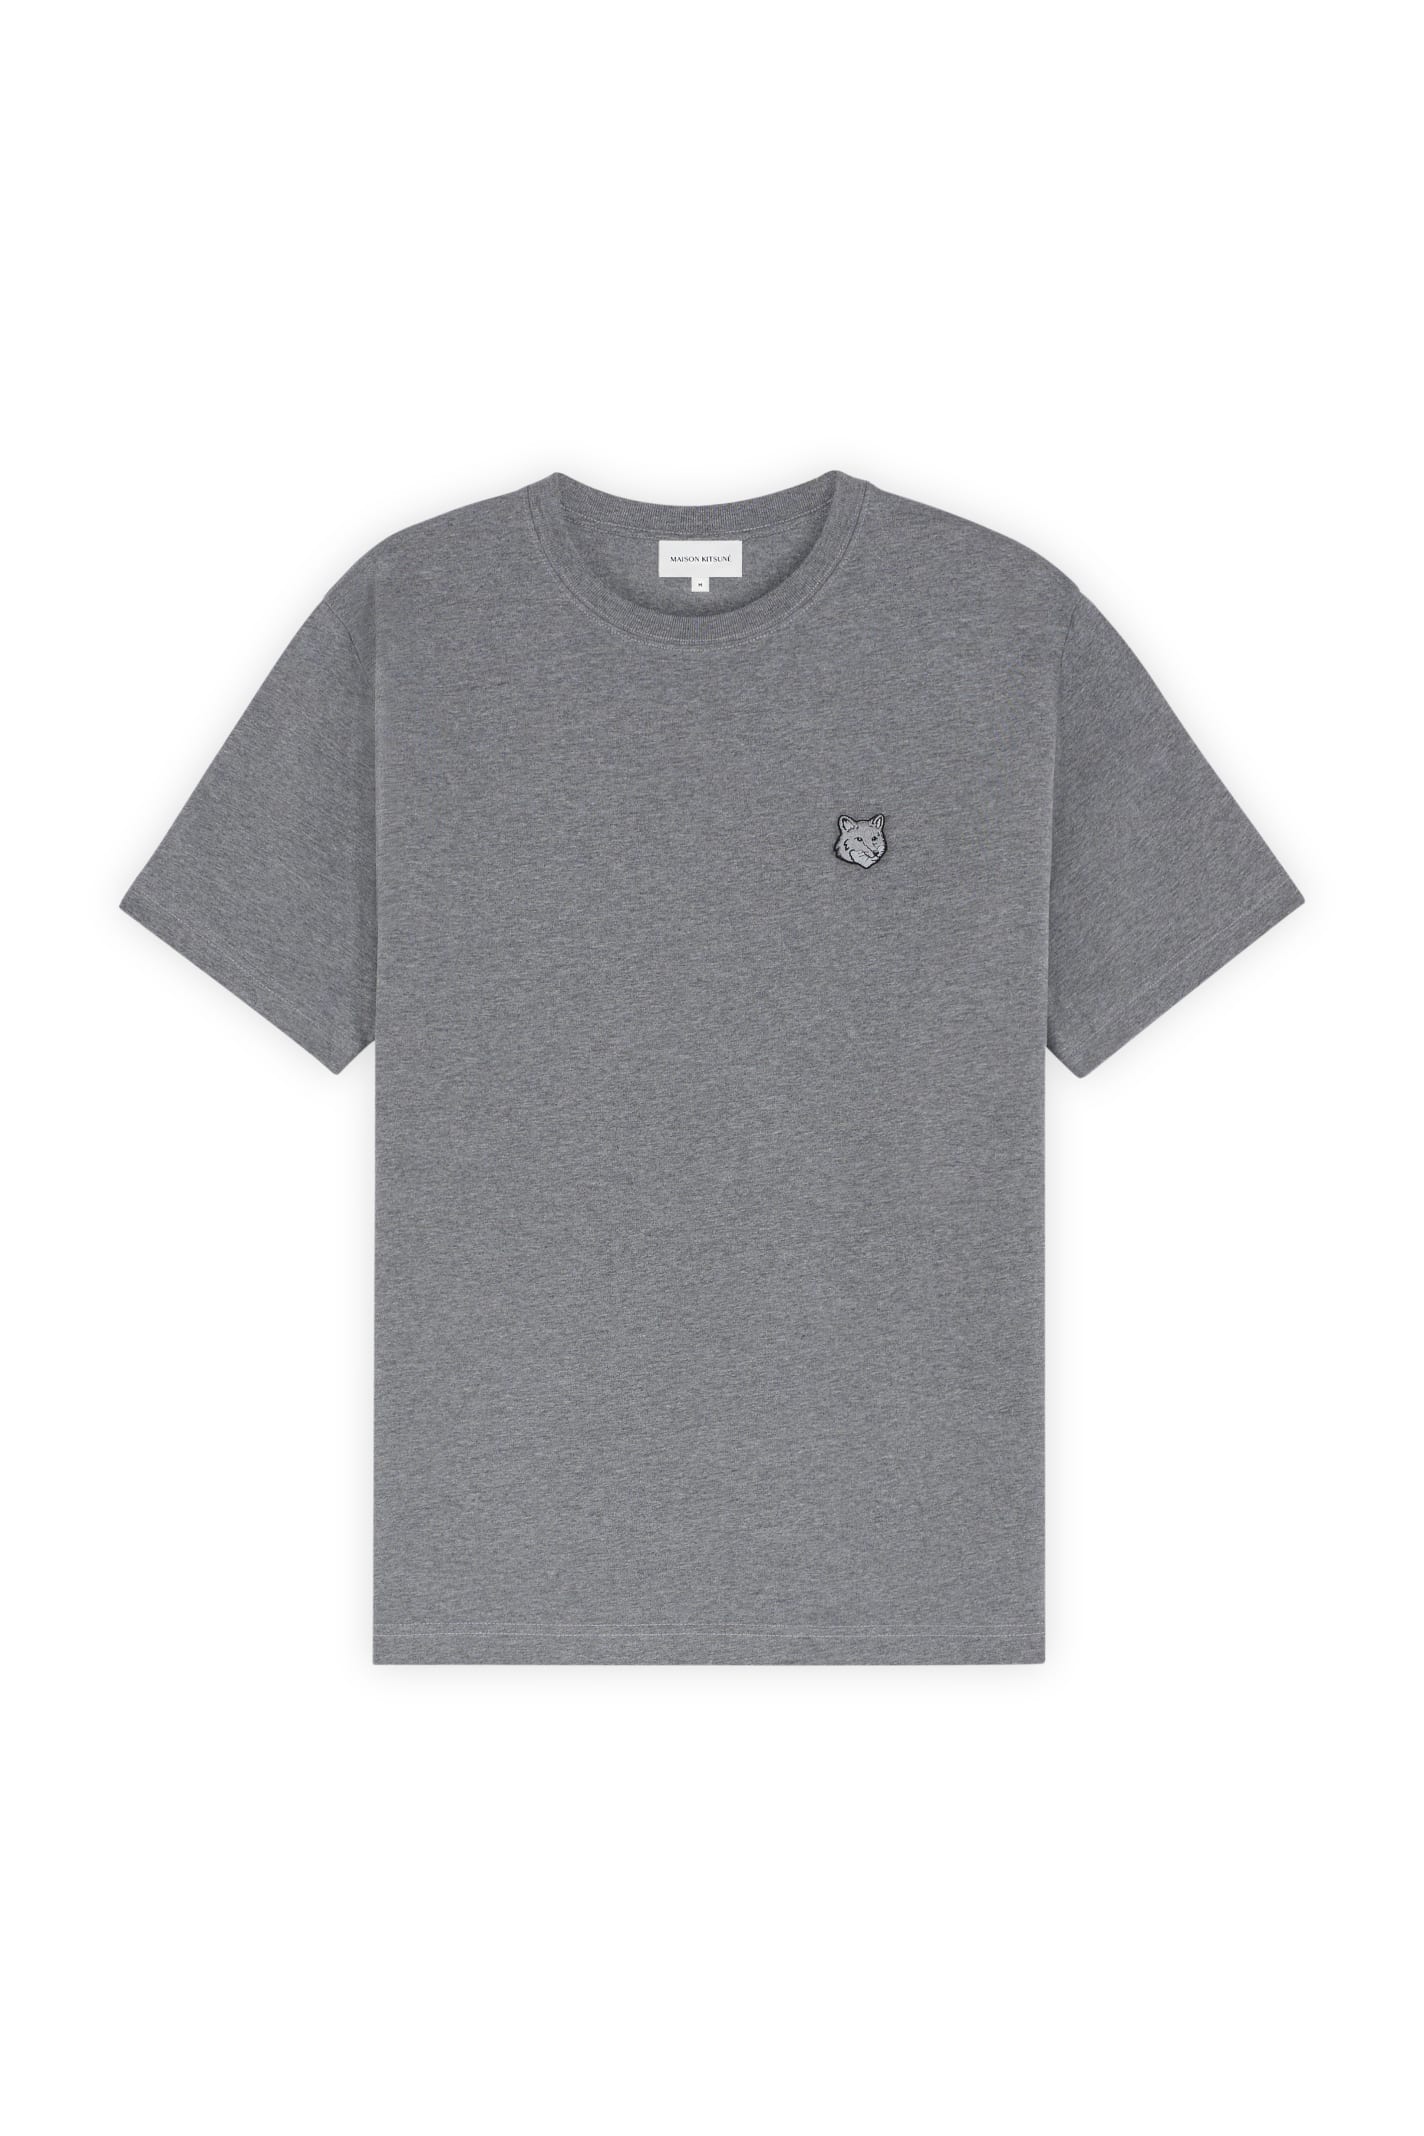 Maison Kitsuné Bold Fox Head Patch Comfort Tee Shirt In Medium Grey Melange